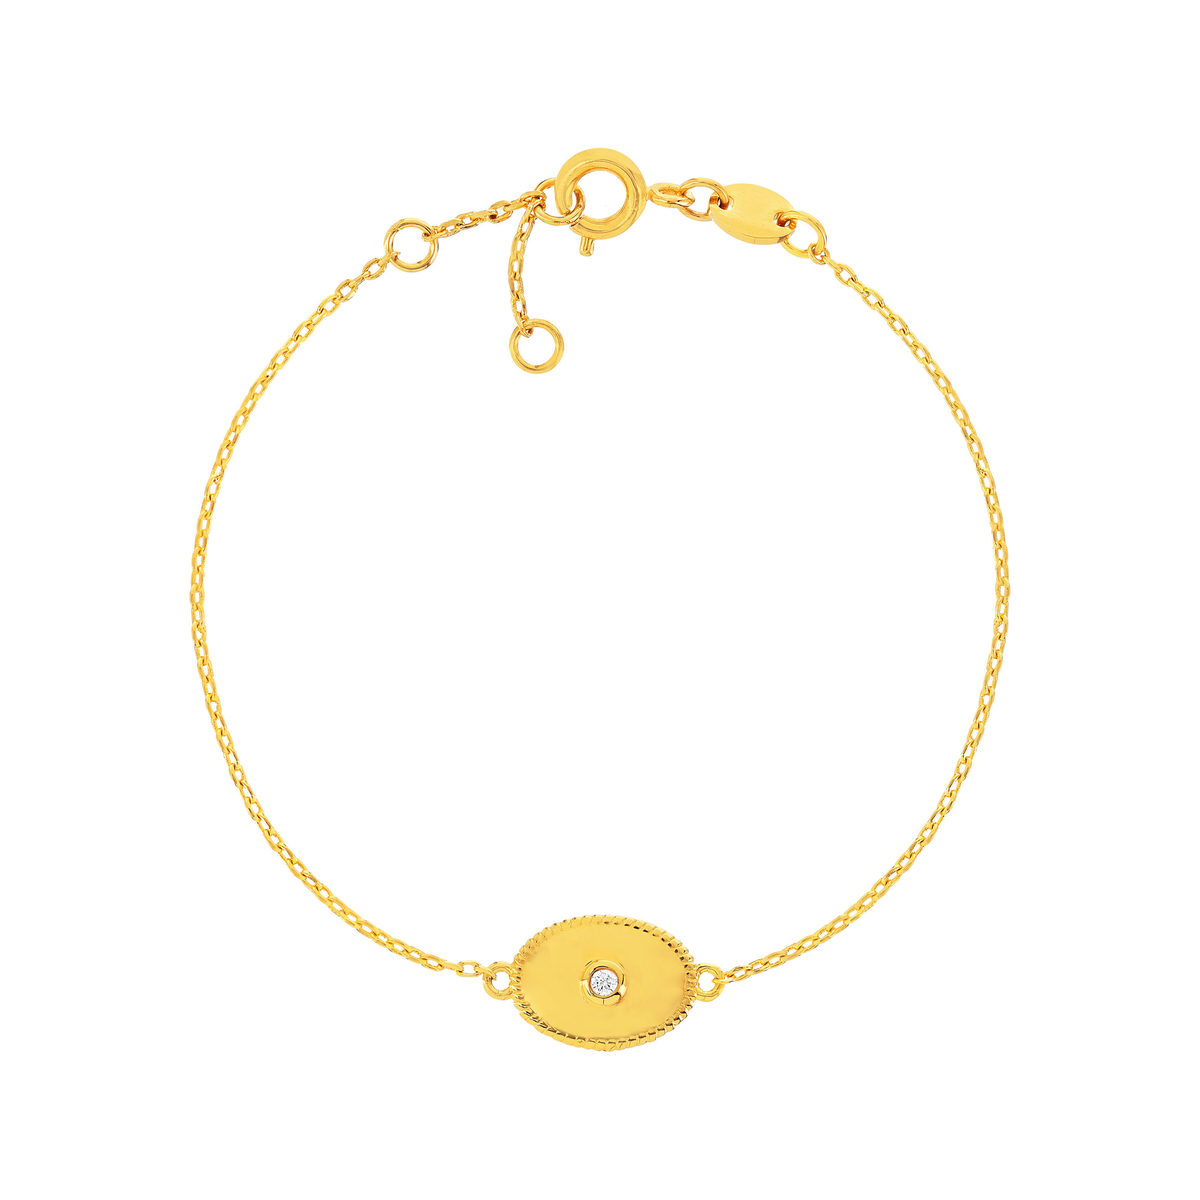 Bracelet plaqué or jaune médaille perlée ovale zirconia 18 cm